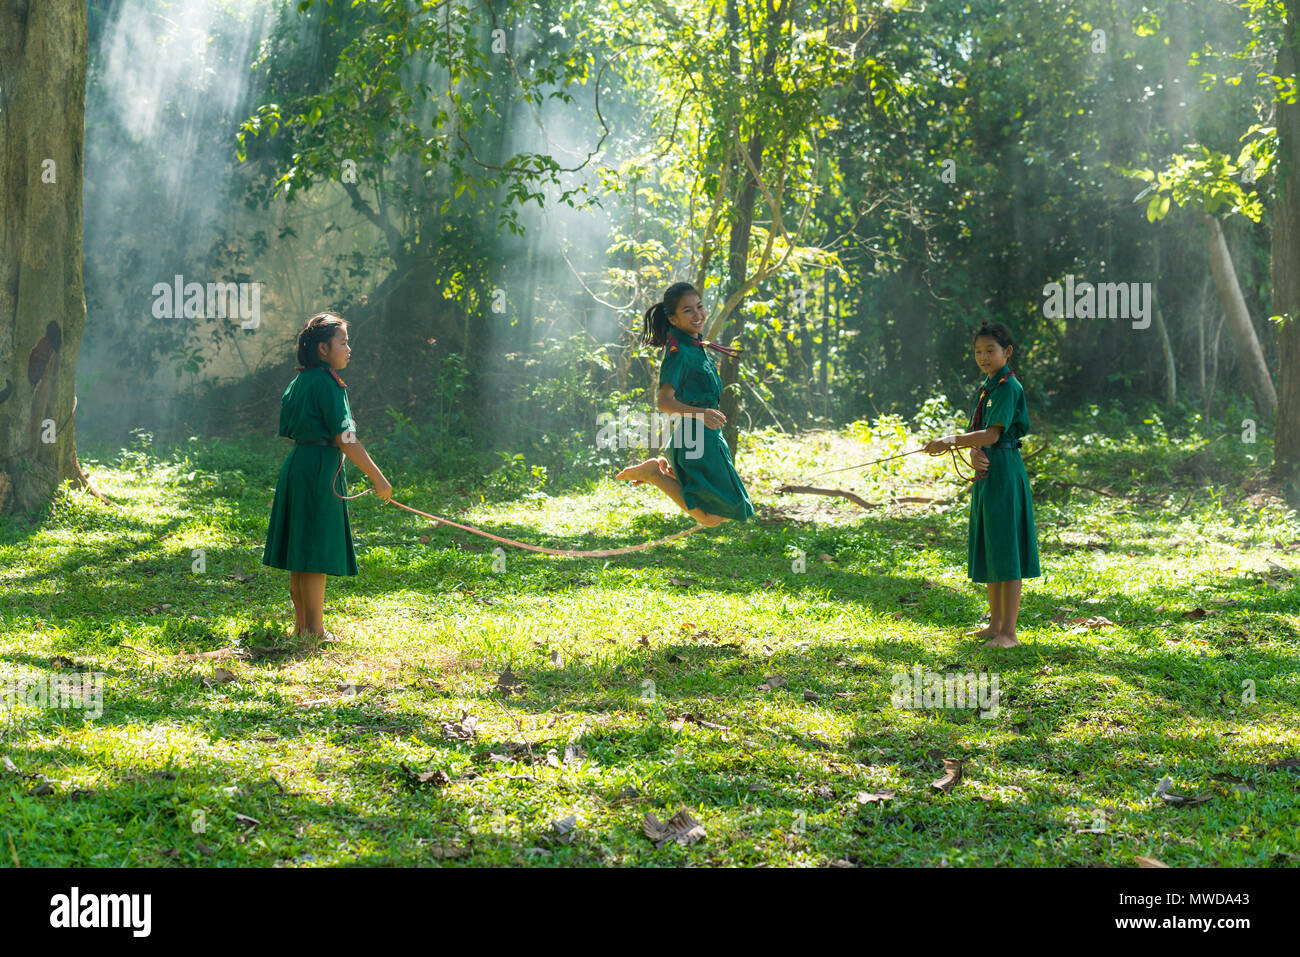 Sakonnakhon, Thailand - July 31, 2016: Three girls in school uniform playing jumping game together on field in rural of Sakonnakhon, Thailand Stock Photo